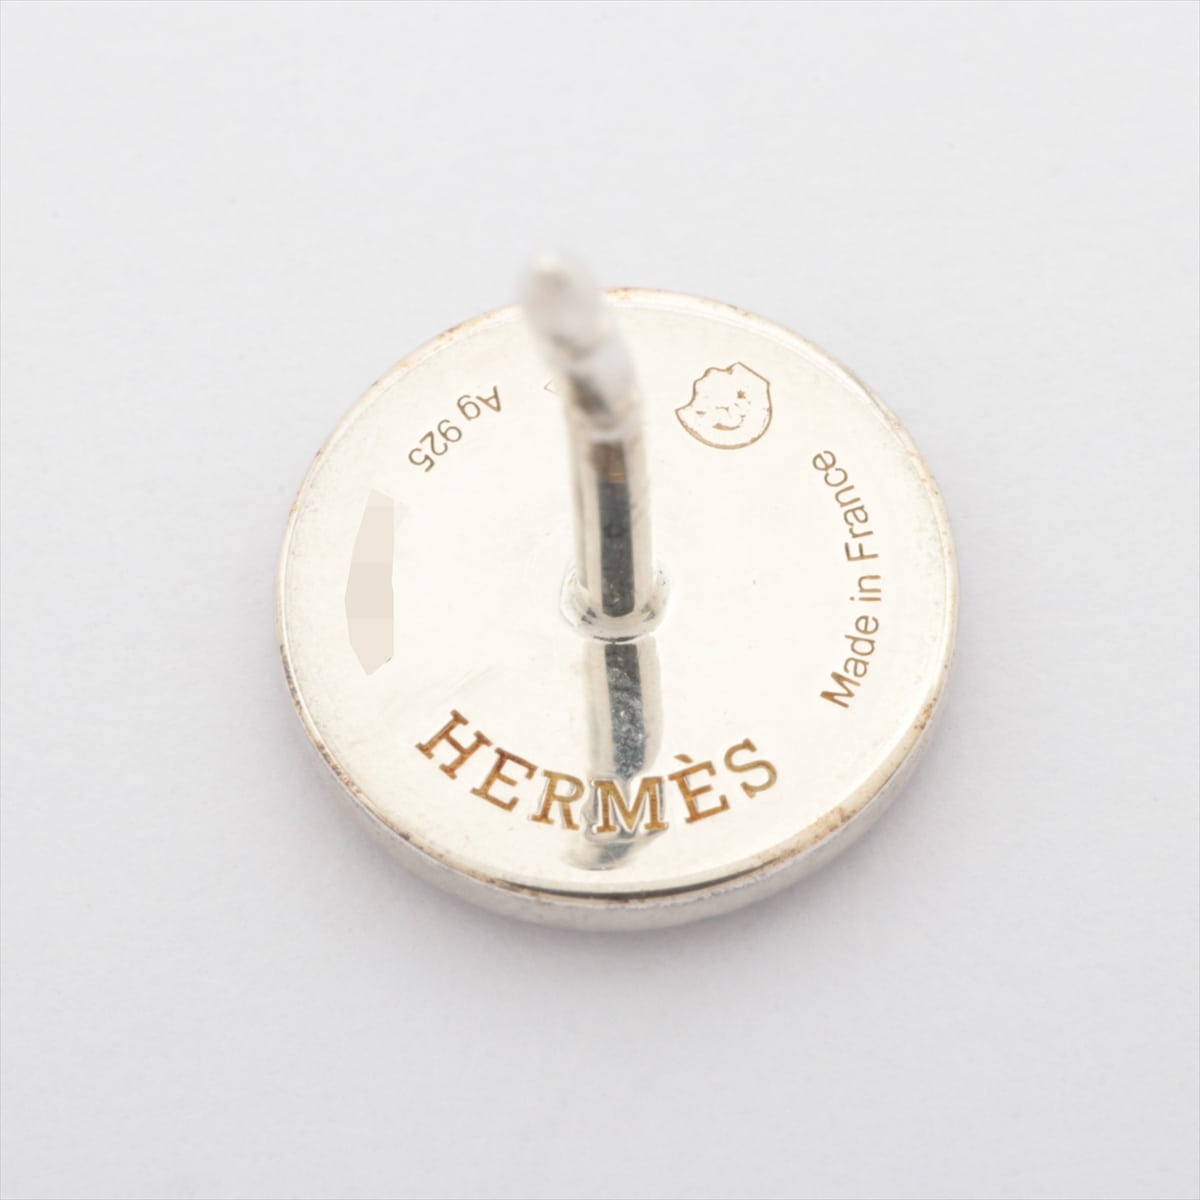 Hermès Logo Piercing jewelry (for both ears) 925 2.3g Silver